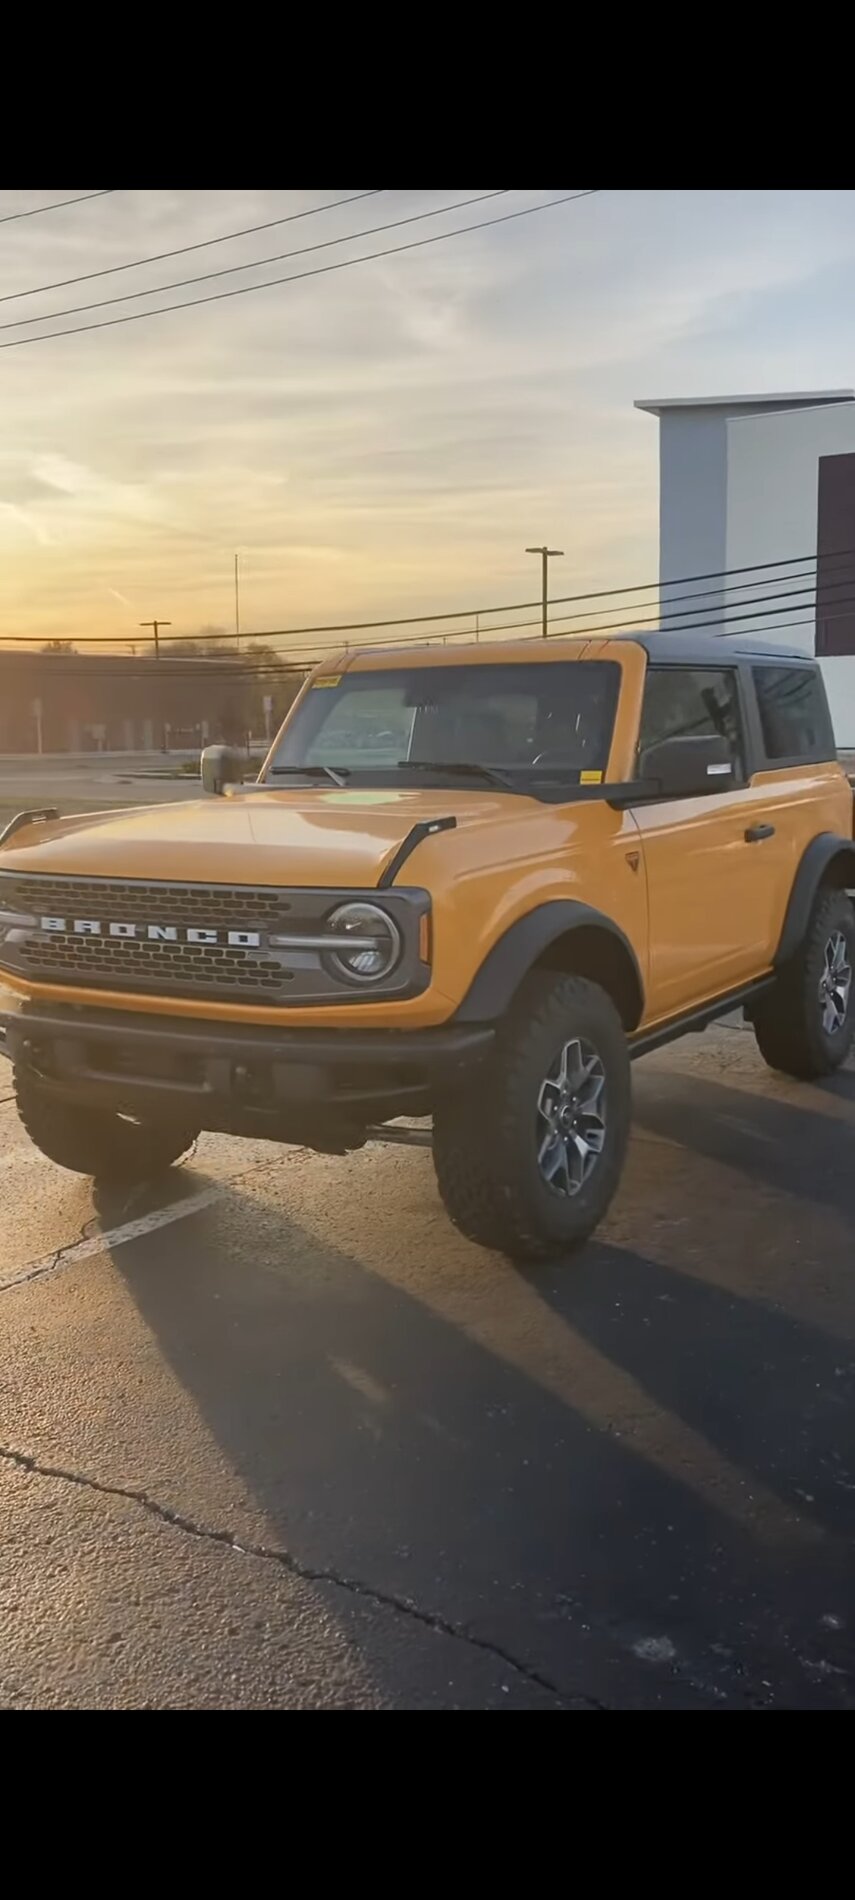 Ford Bronco In the wild: Cyber Orange 2dr Badlands w/ base wheels Screenshot_20201209-040254_YouTube